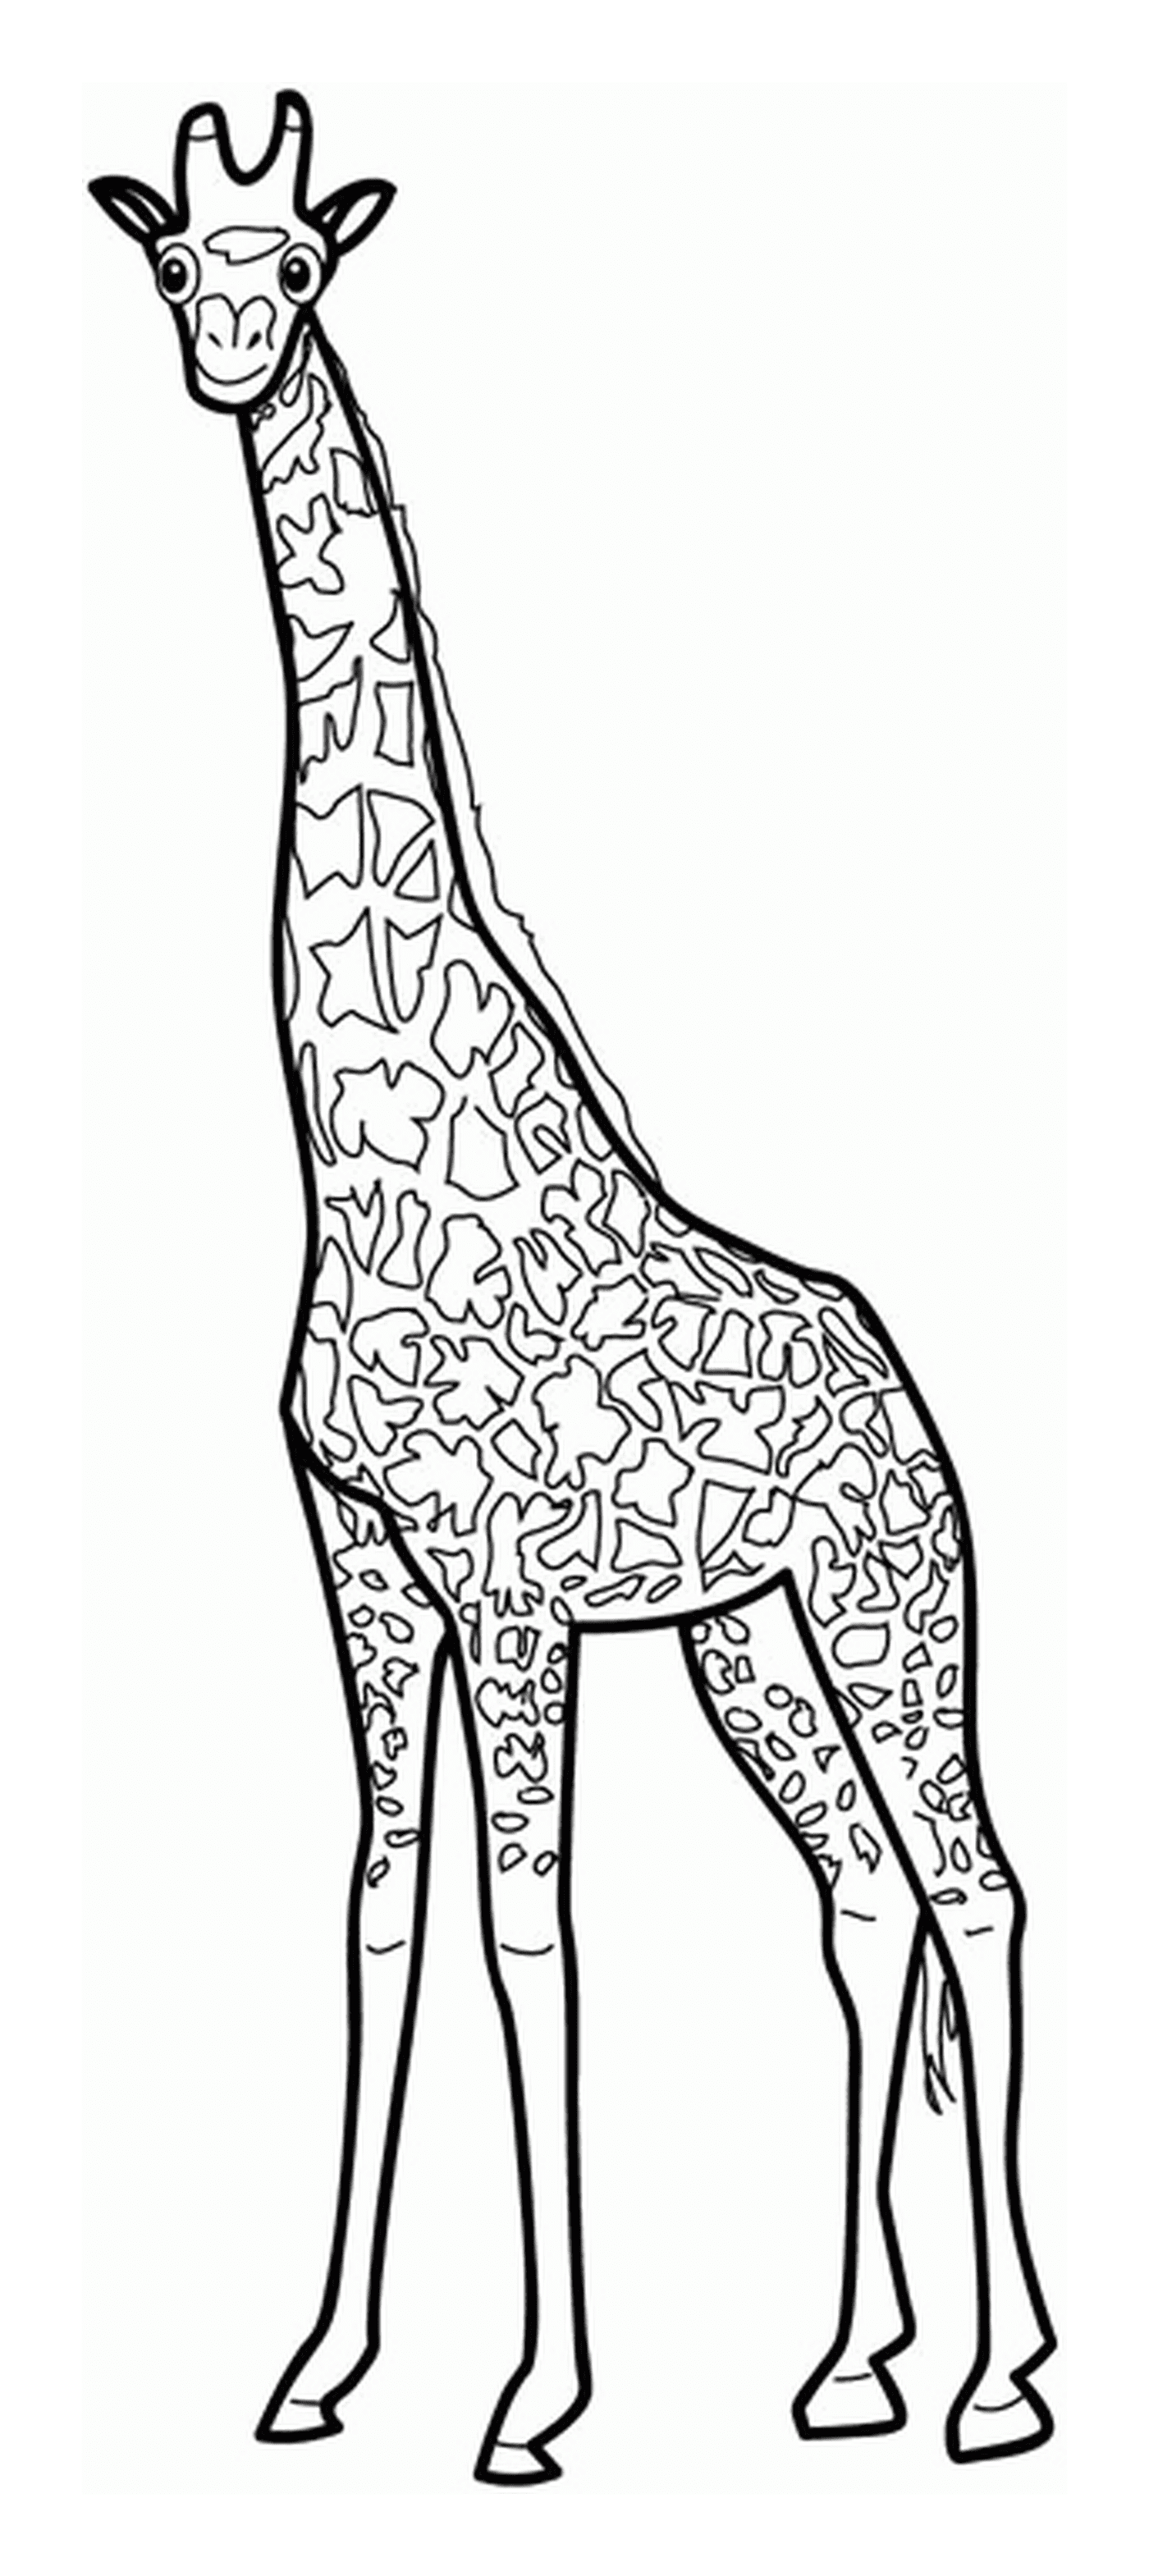 coloriage dessin animaux girafe